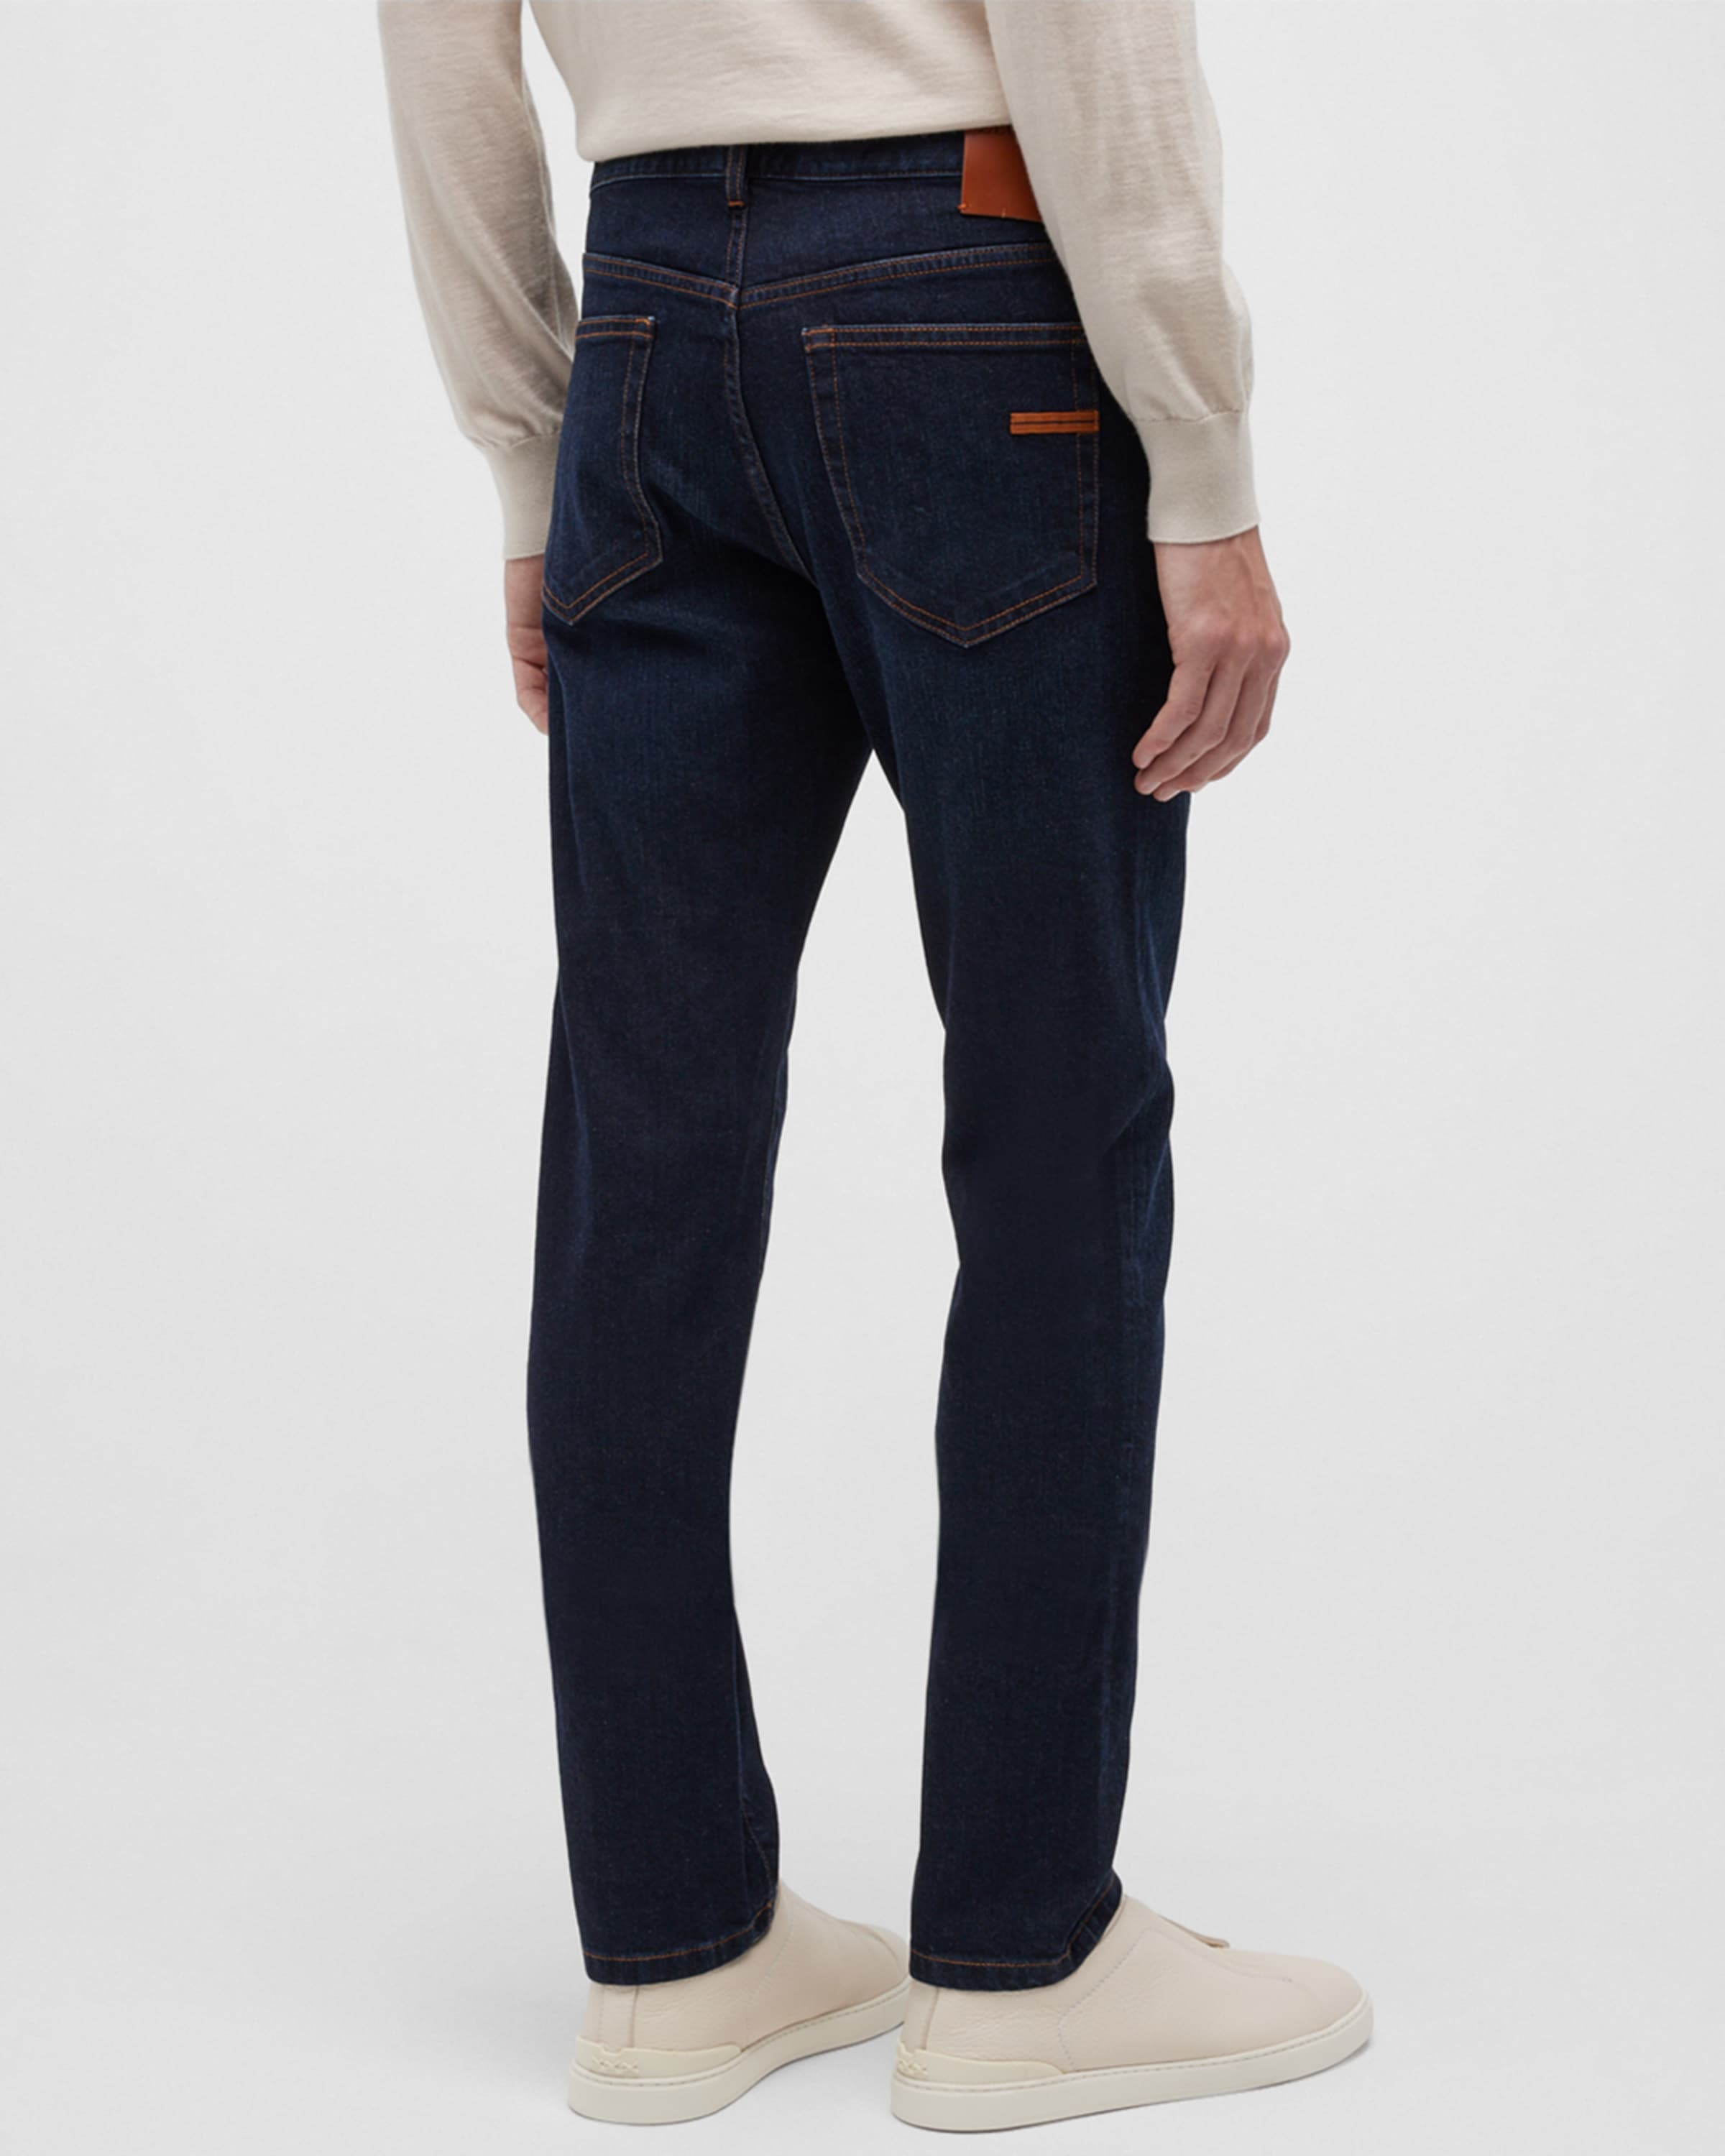 Men's 5-Pocket Dark Wash Denim Jeans - 4